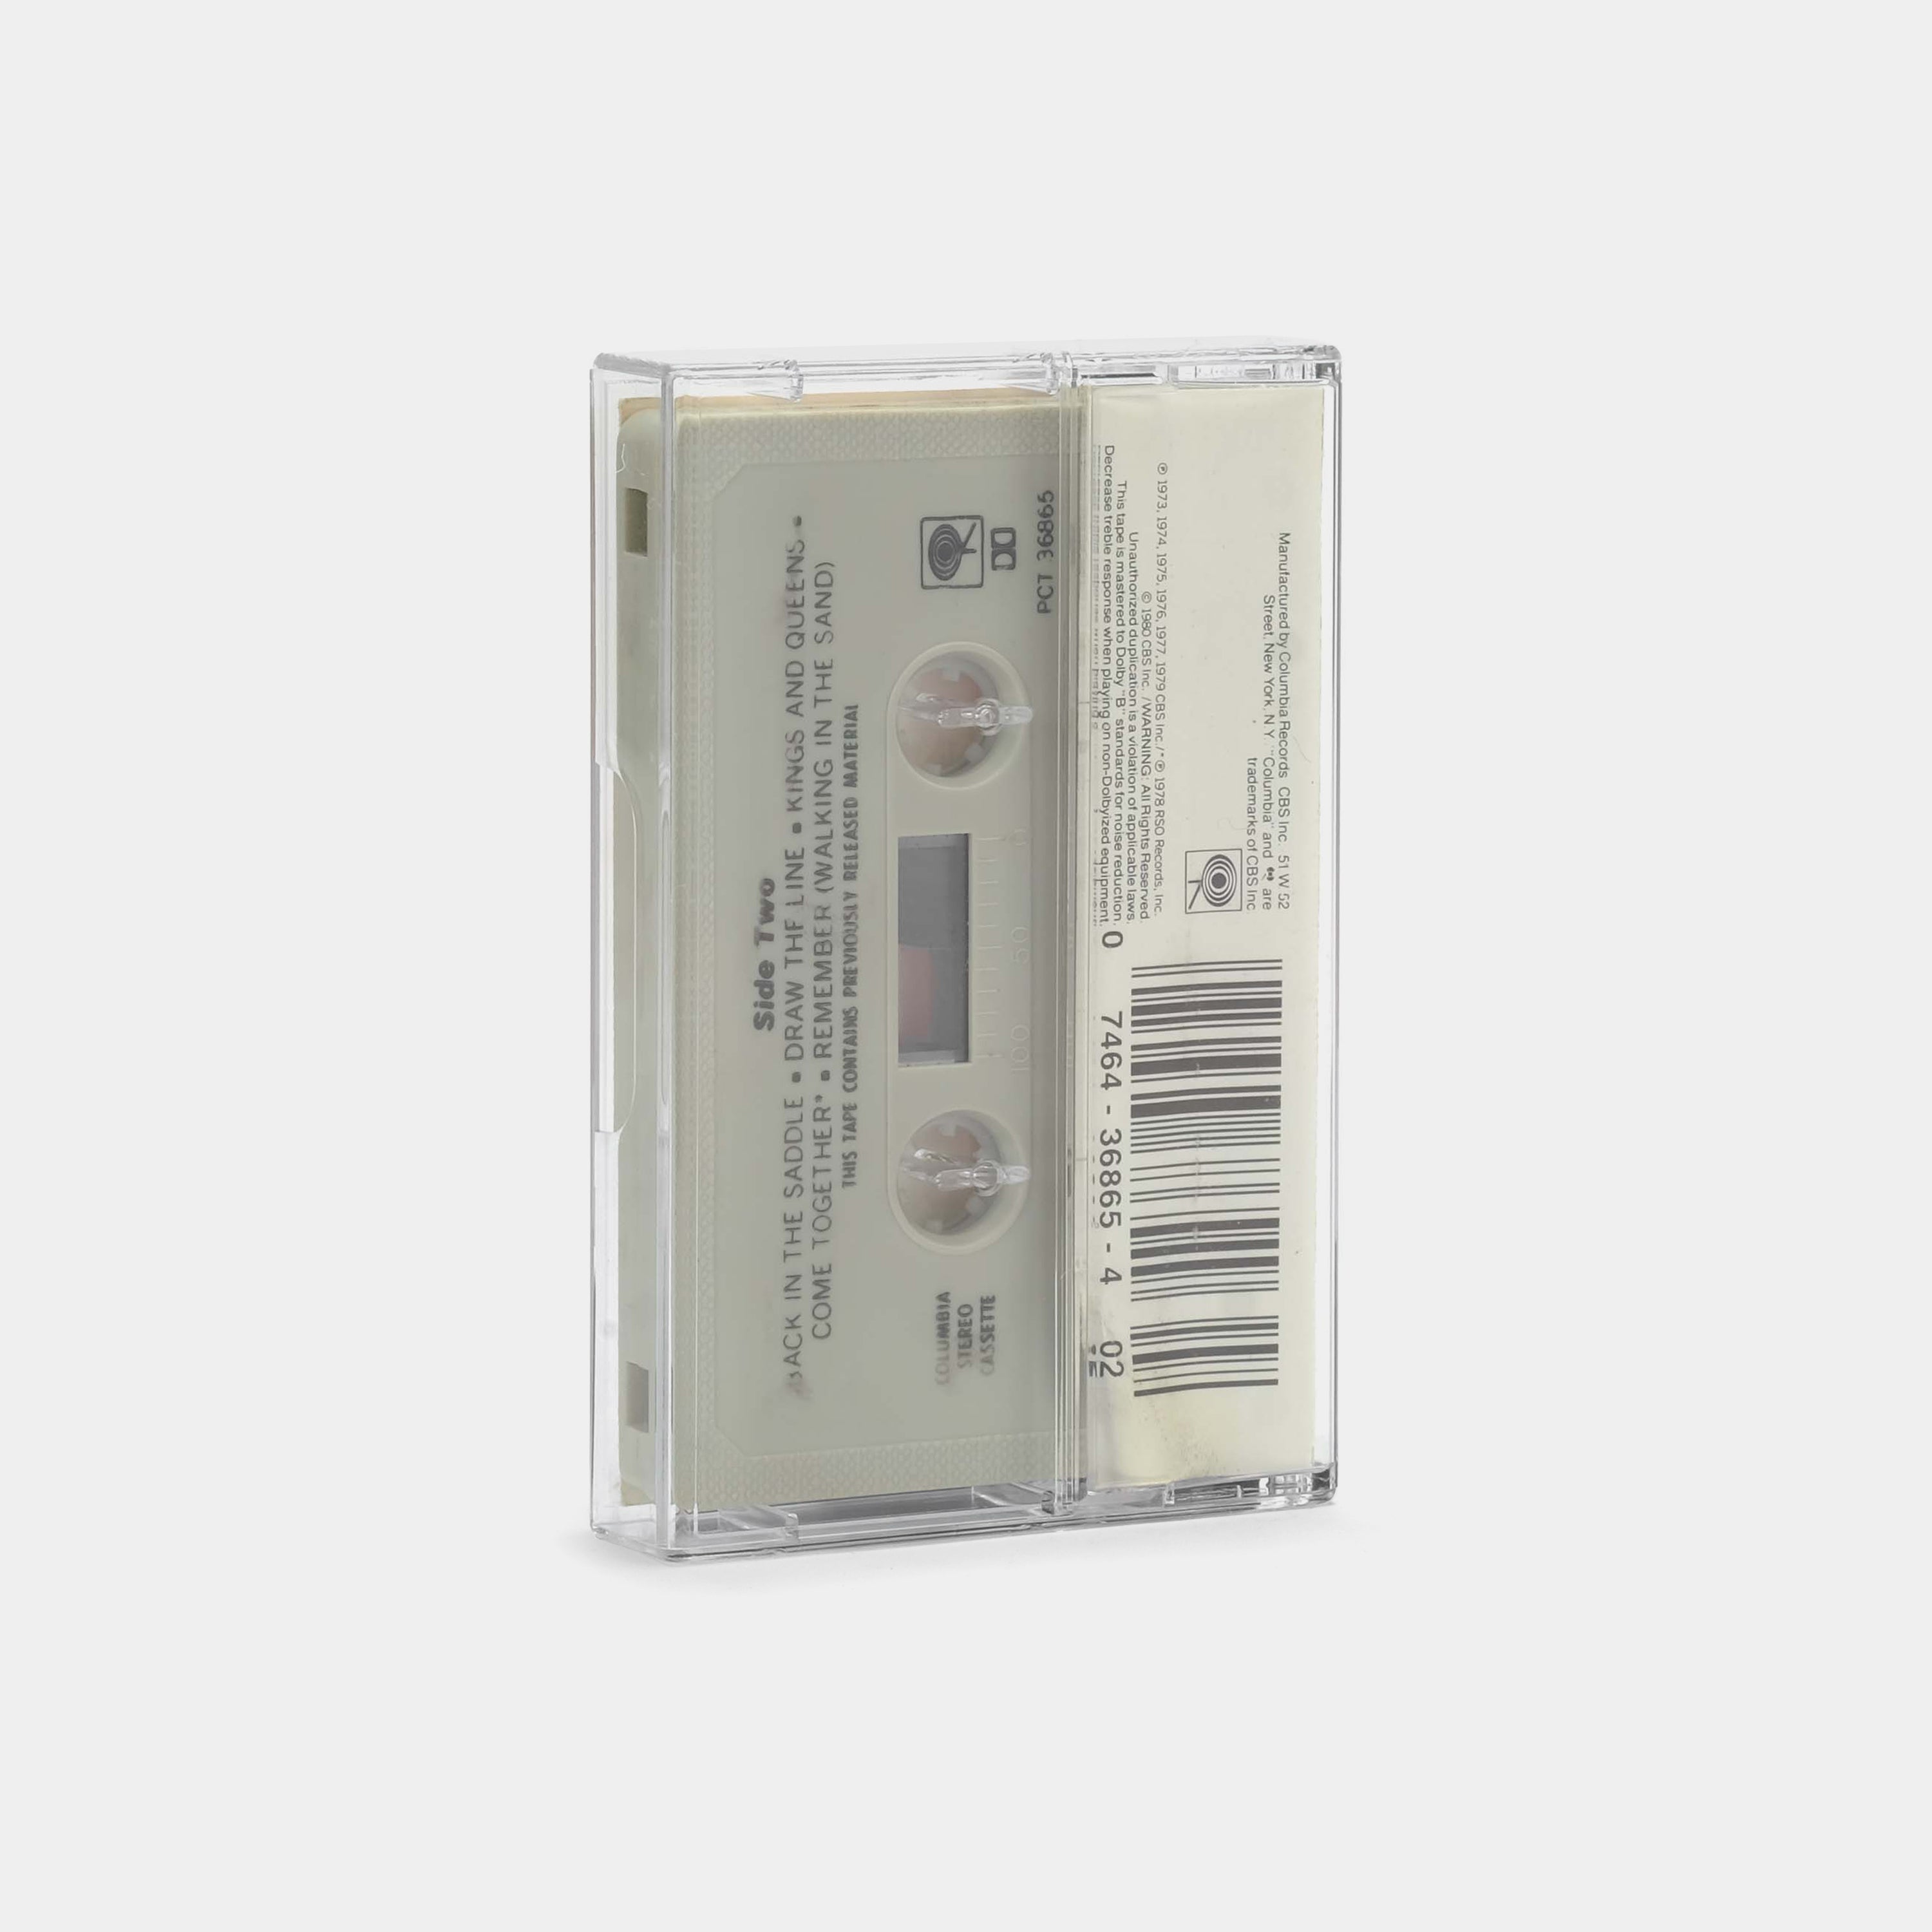 Aerosmith - Greatest Hits Cassette Tape